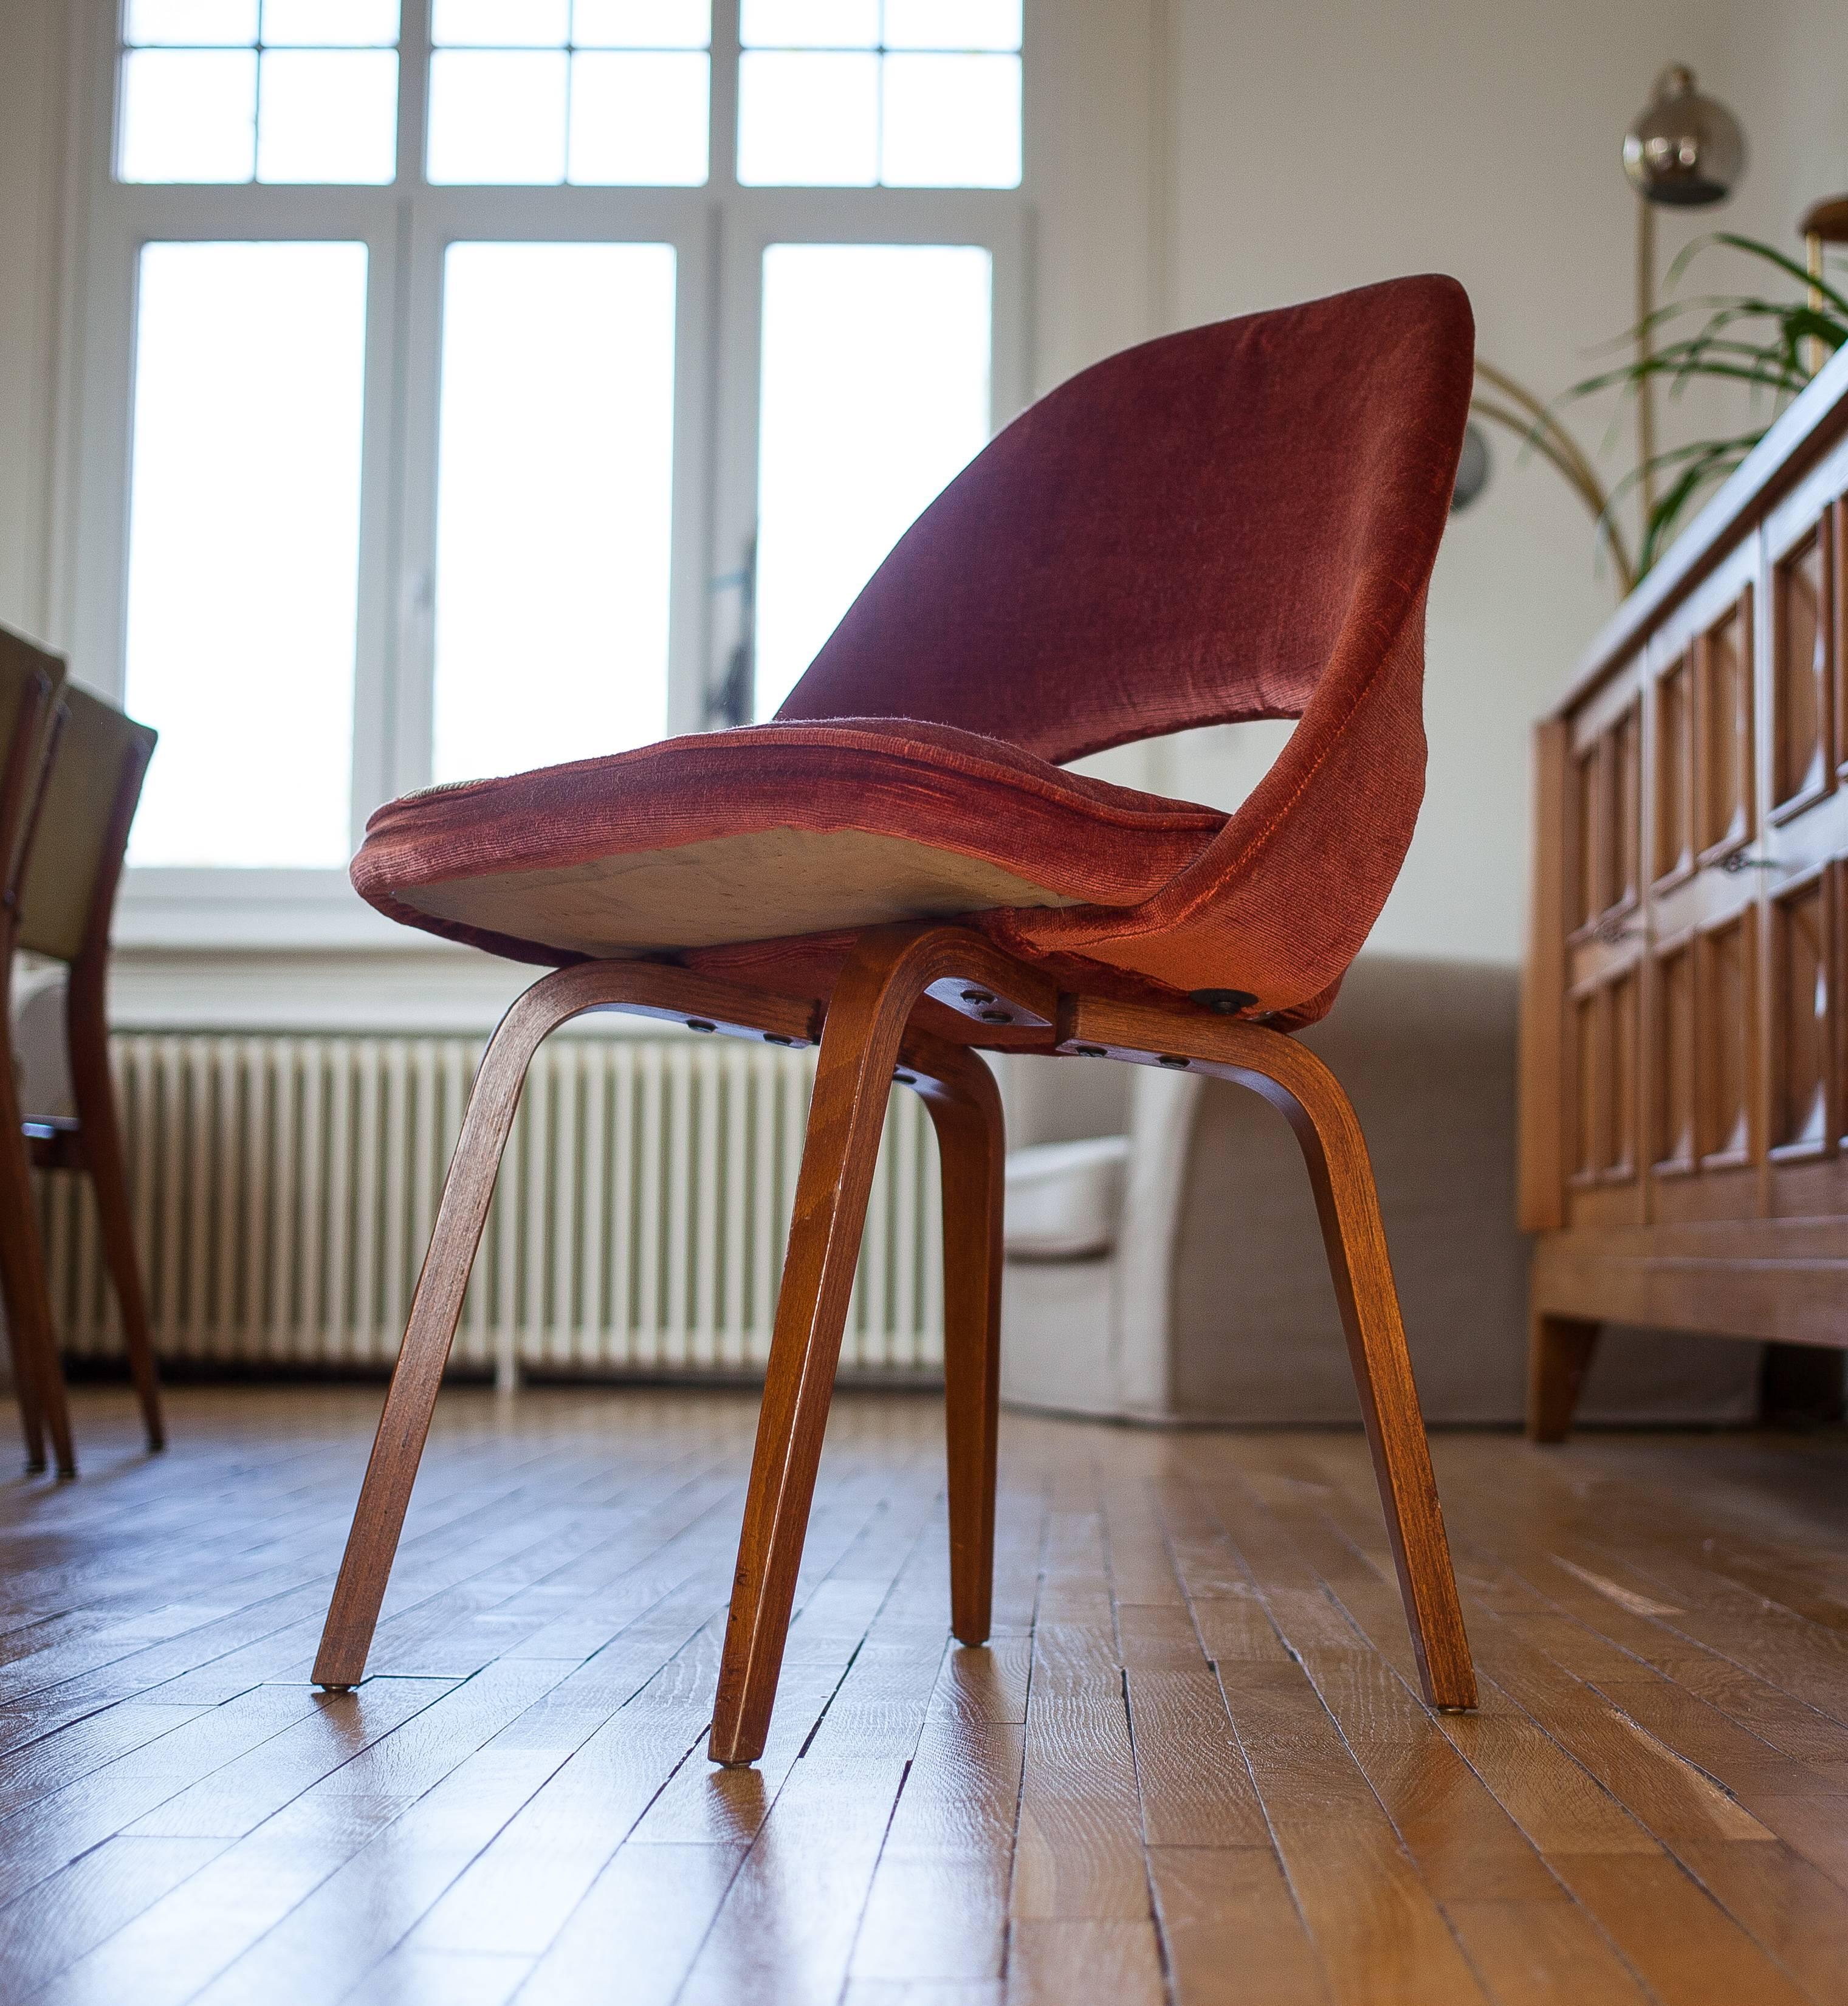 Mid-20th Century Eero Saarinen Style, Wood Legs and Velvet Upholstery For Sale